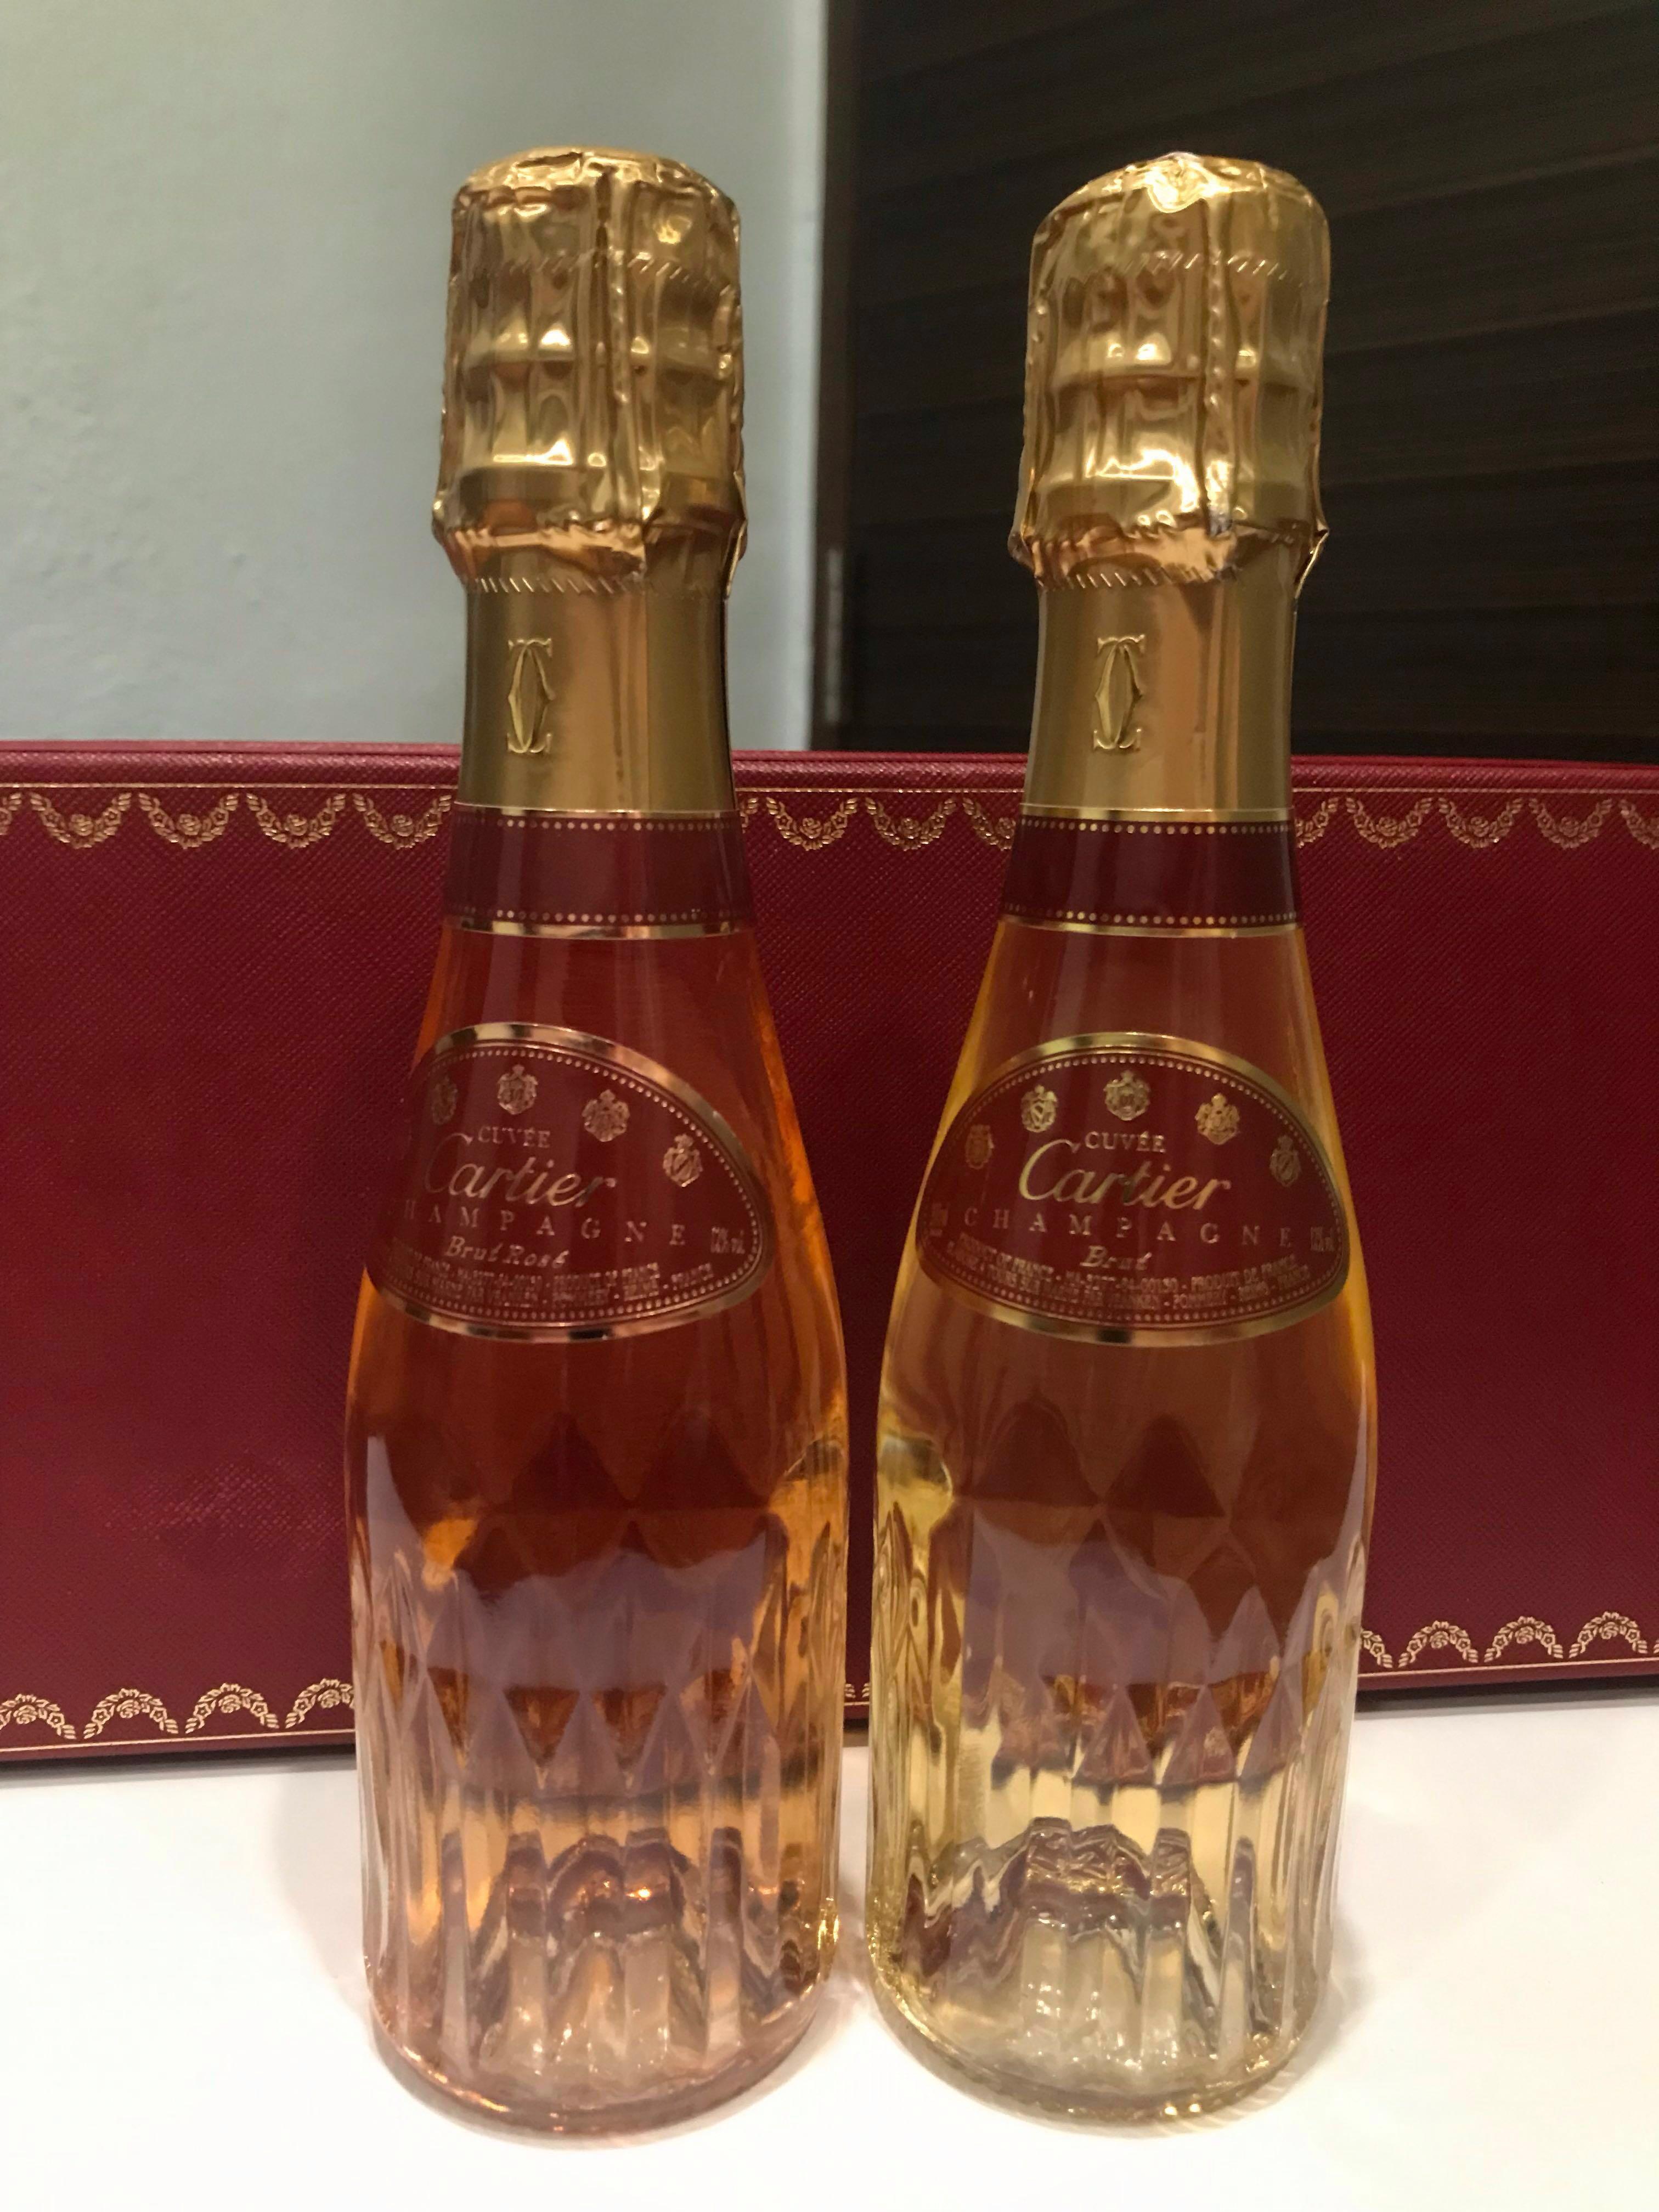 Cuvée Cartier Champagne - Brut \u0026 Brut 